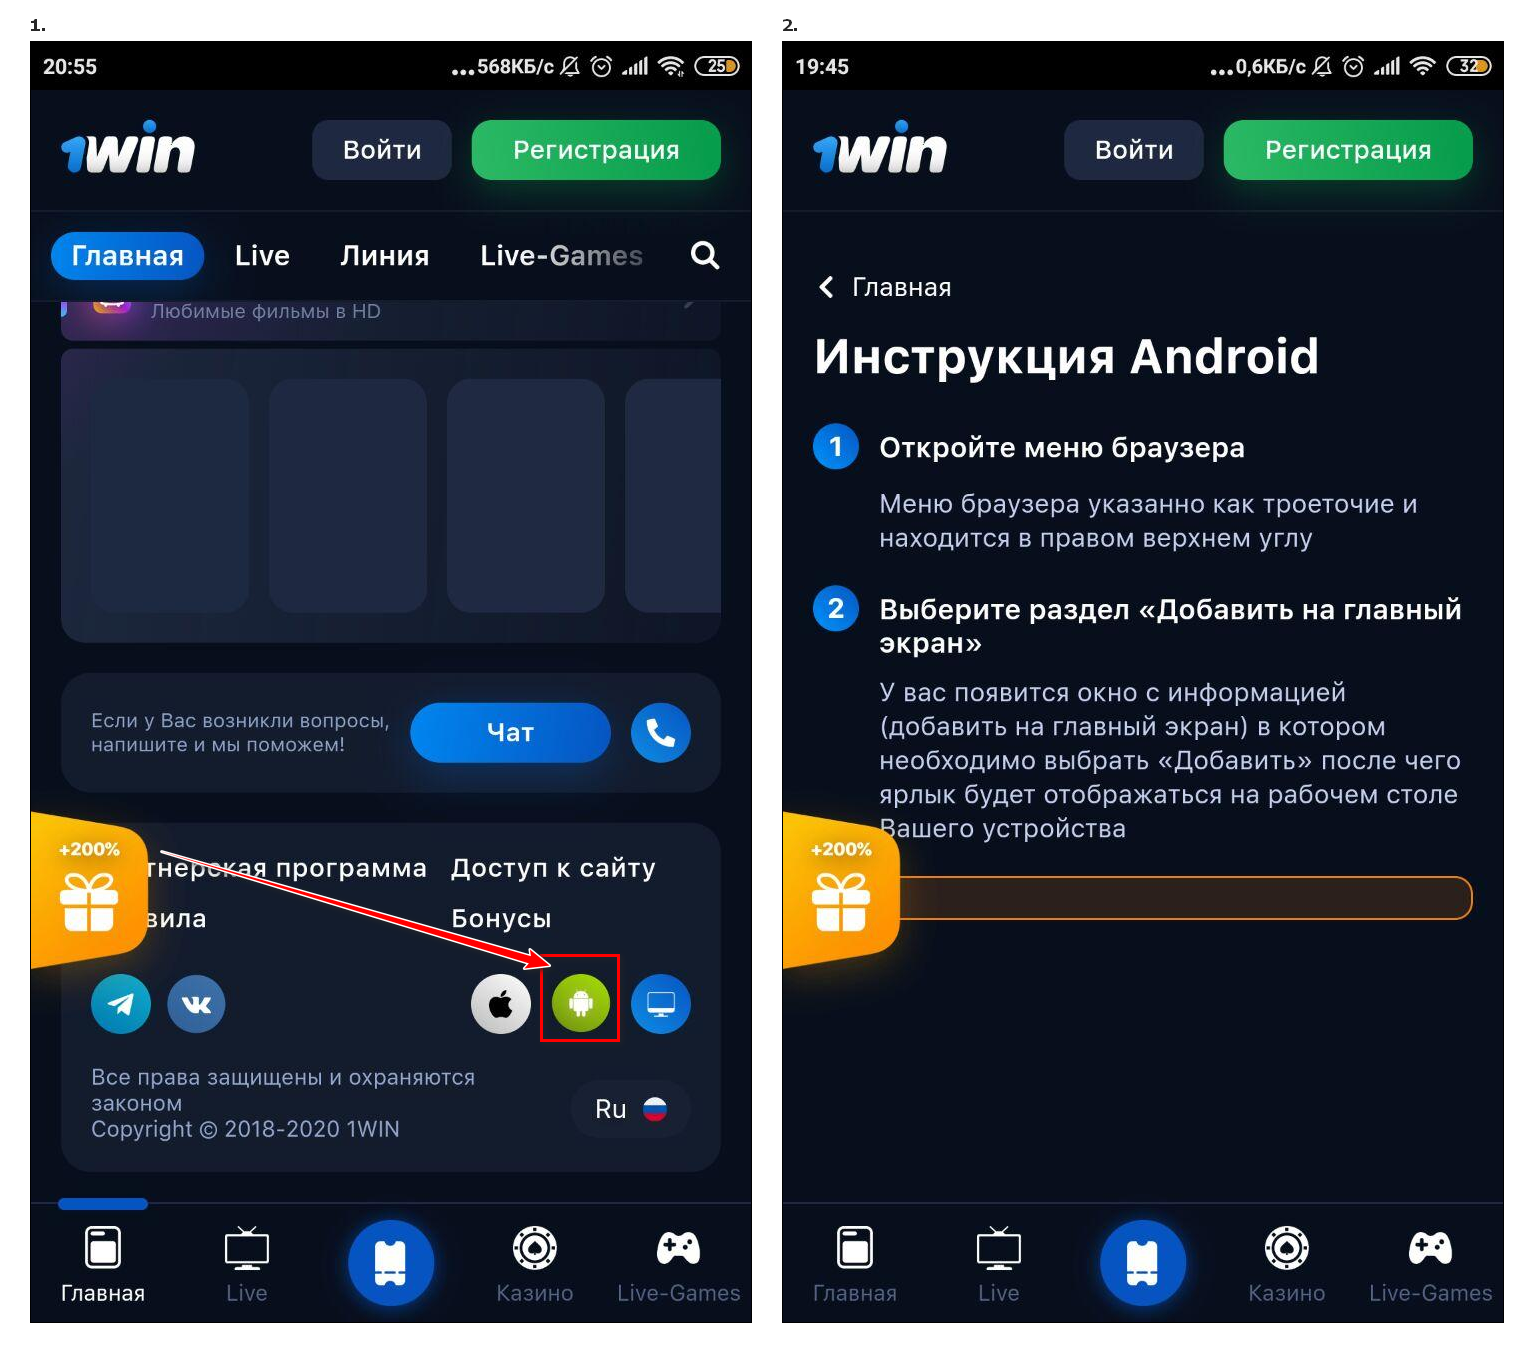 1win 1win bk license pw. 1вин приложение. Андроид 1.